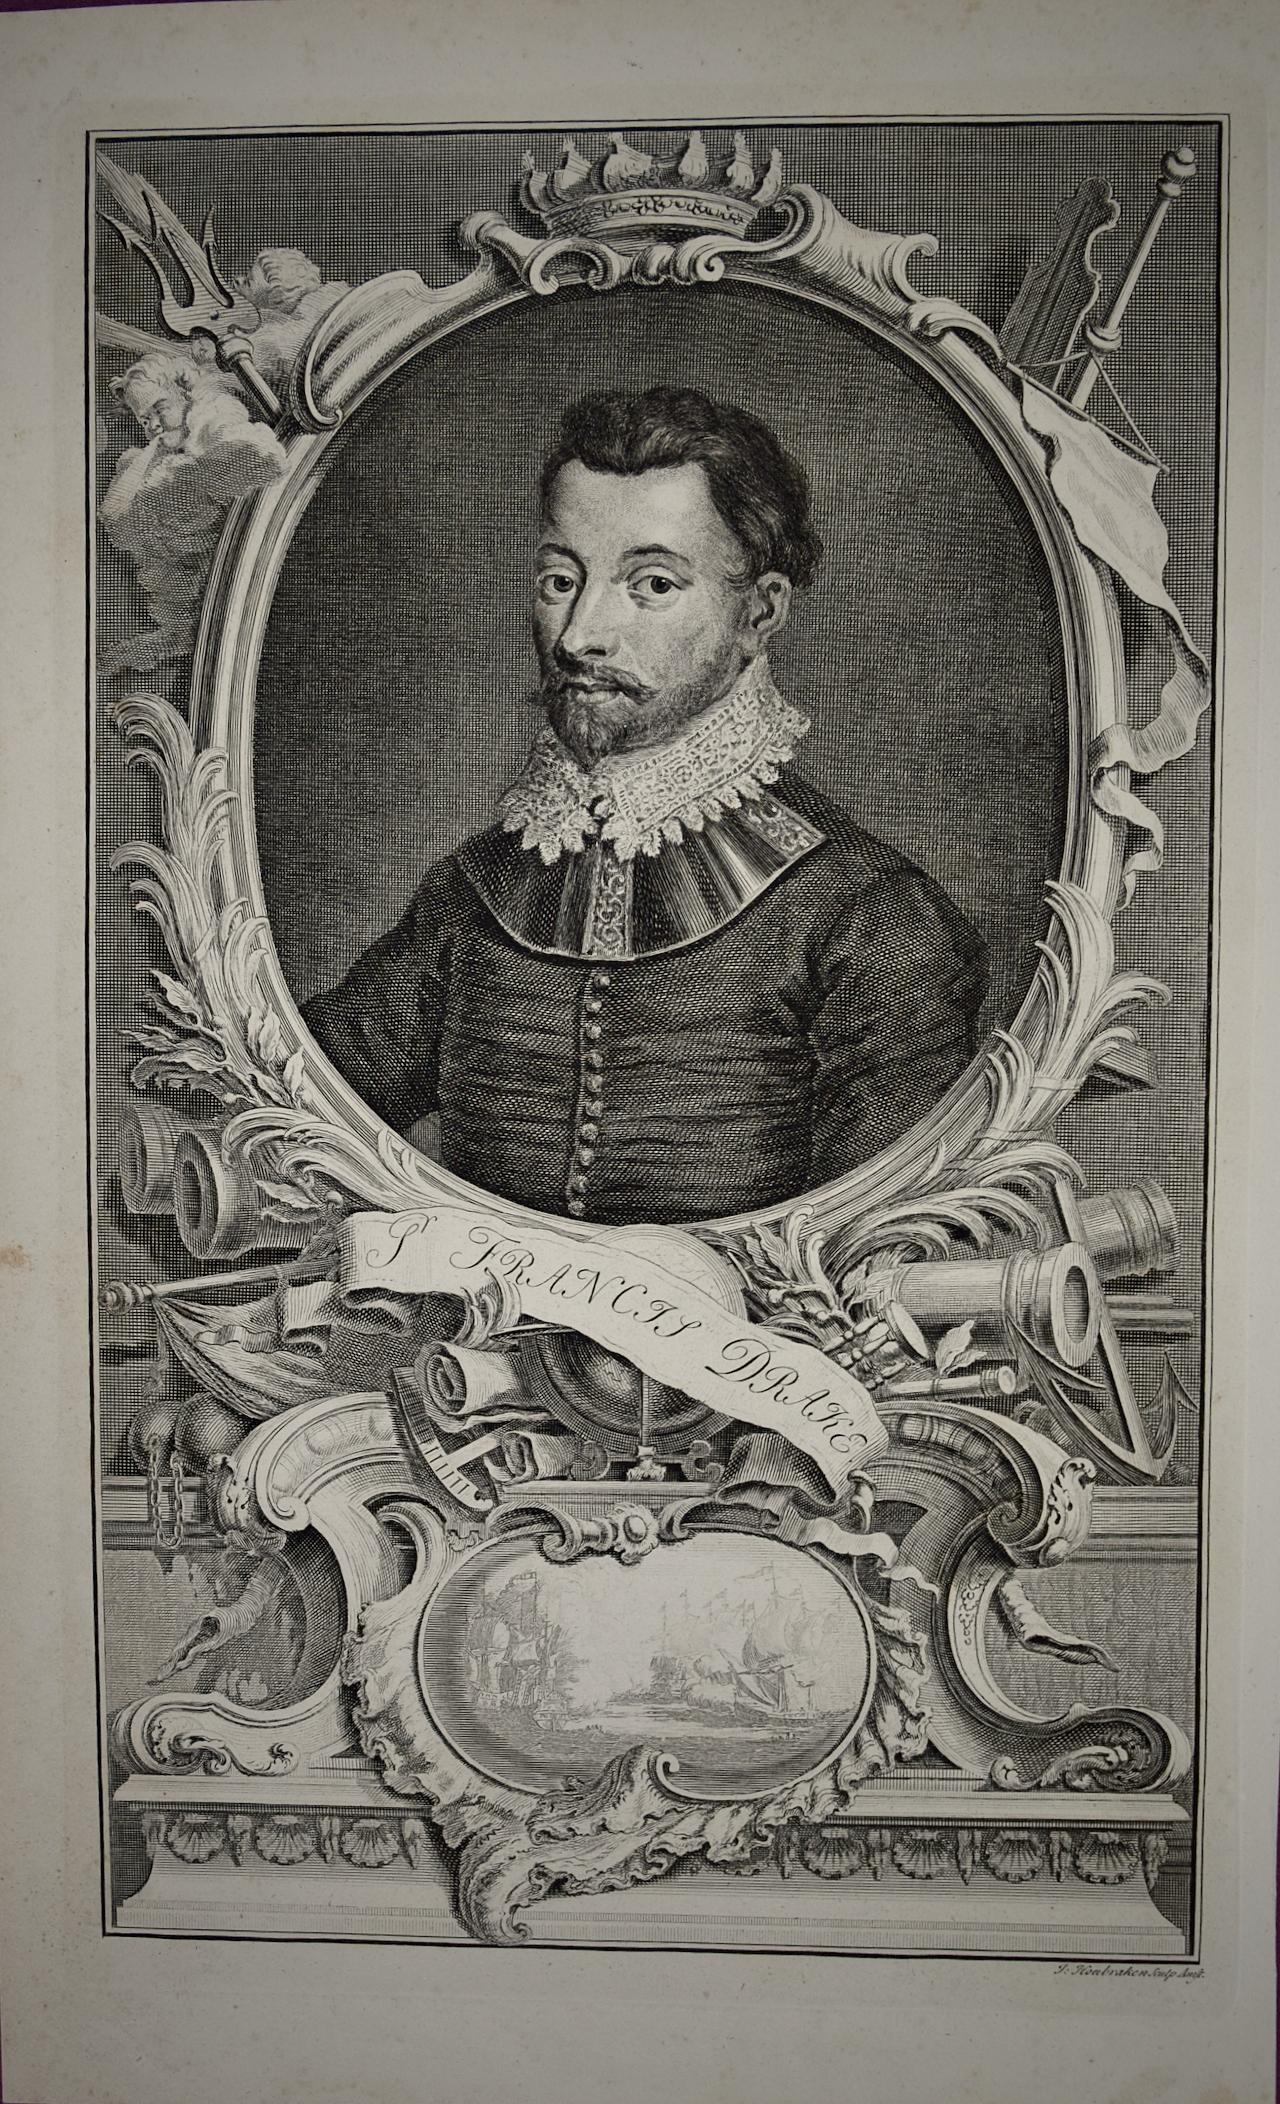 Sir Francis Drake: 18th C. Portrait of 16th C. Navigator, Privateer, Politician